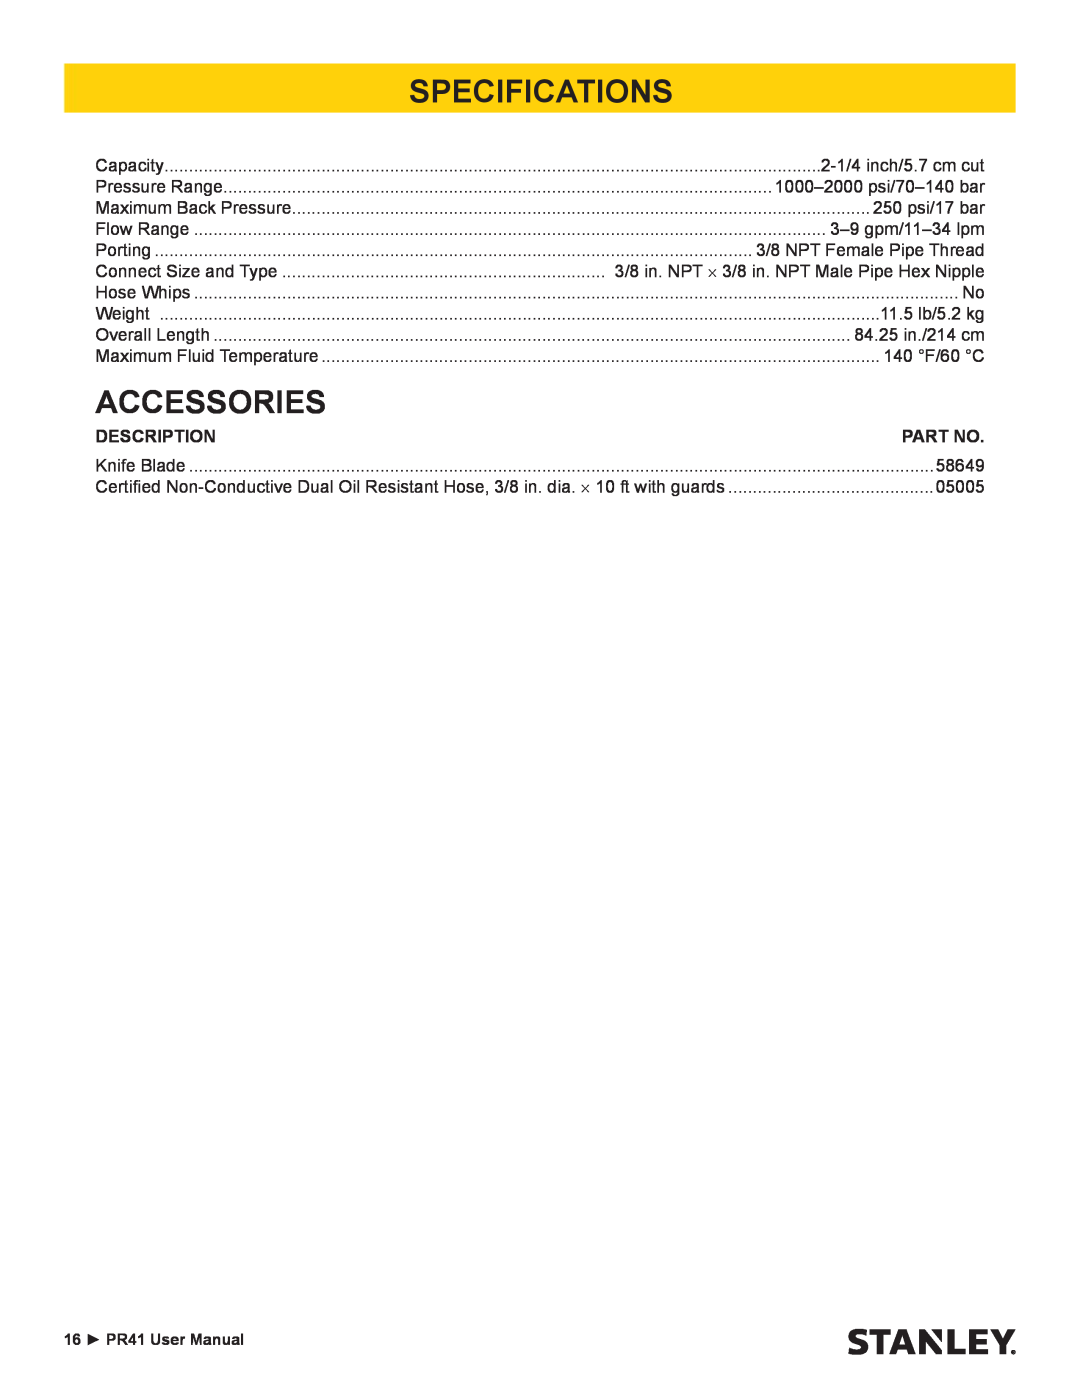 Stanley Black & Decker PR41 manual Specifications, Accessories, Description 